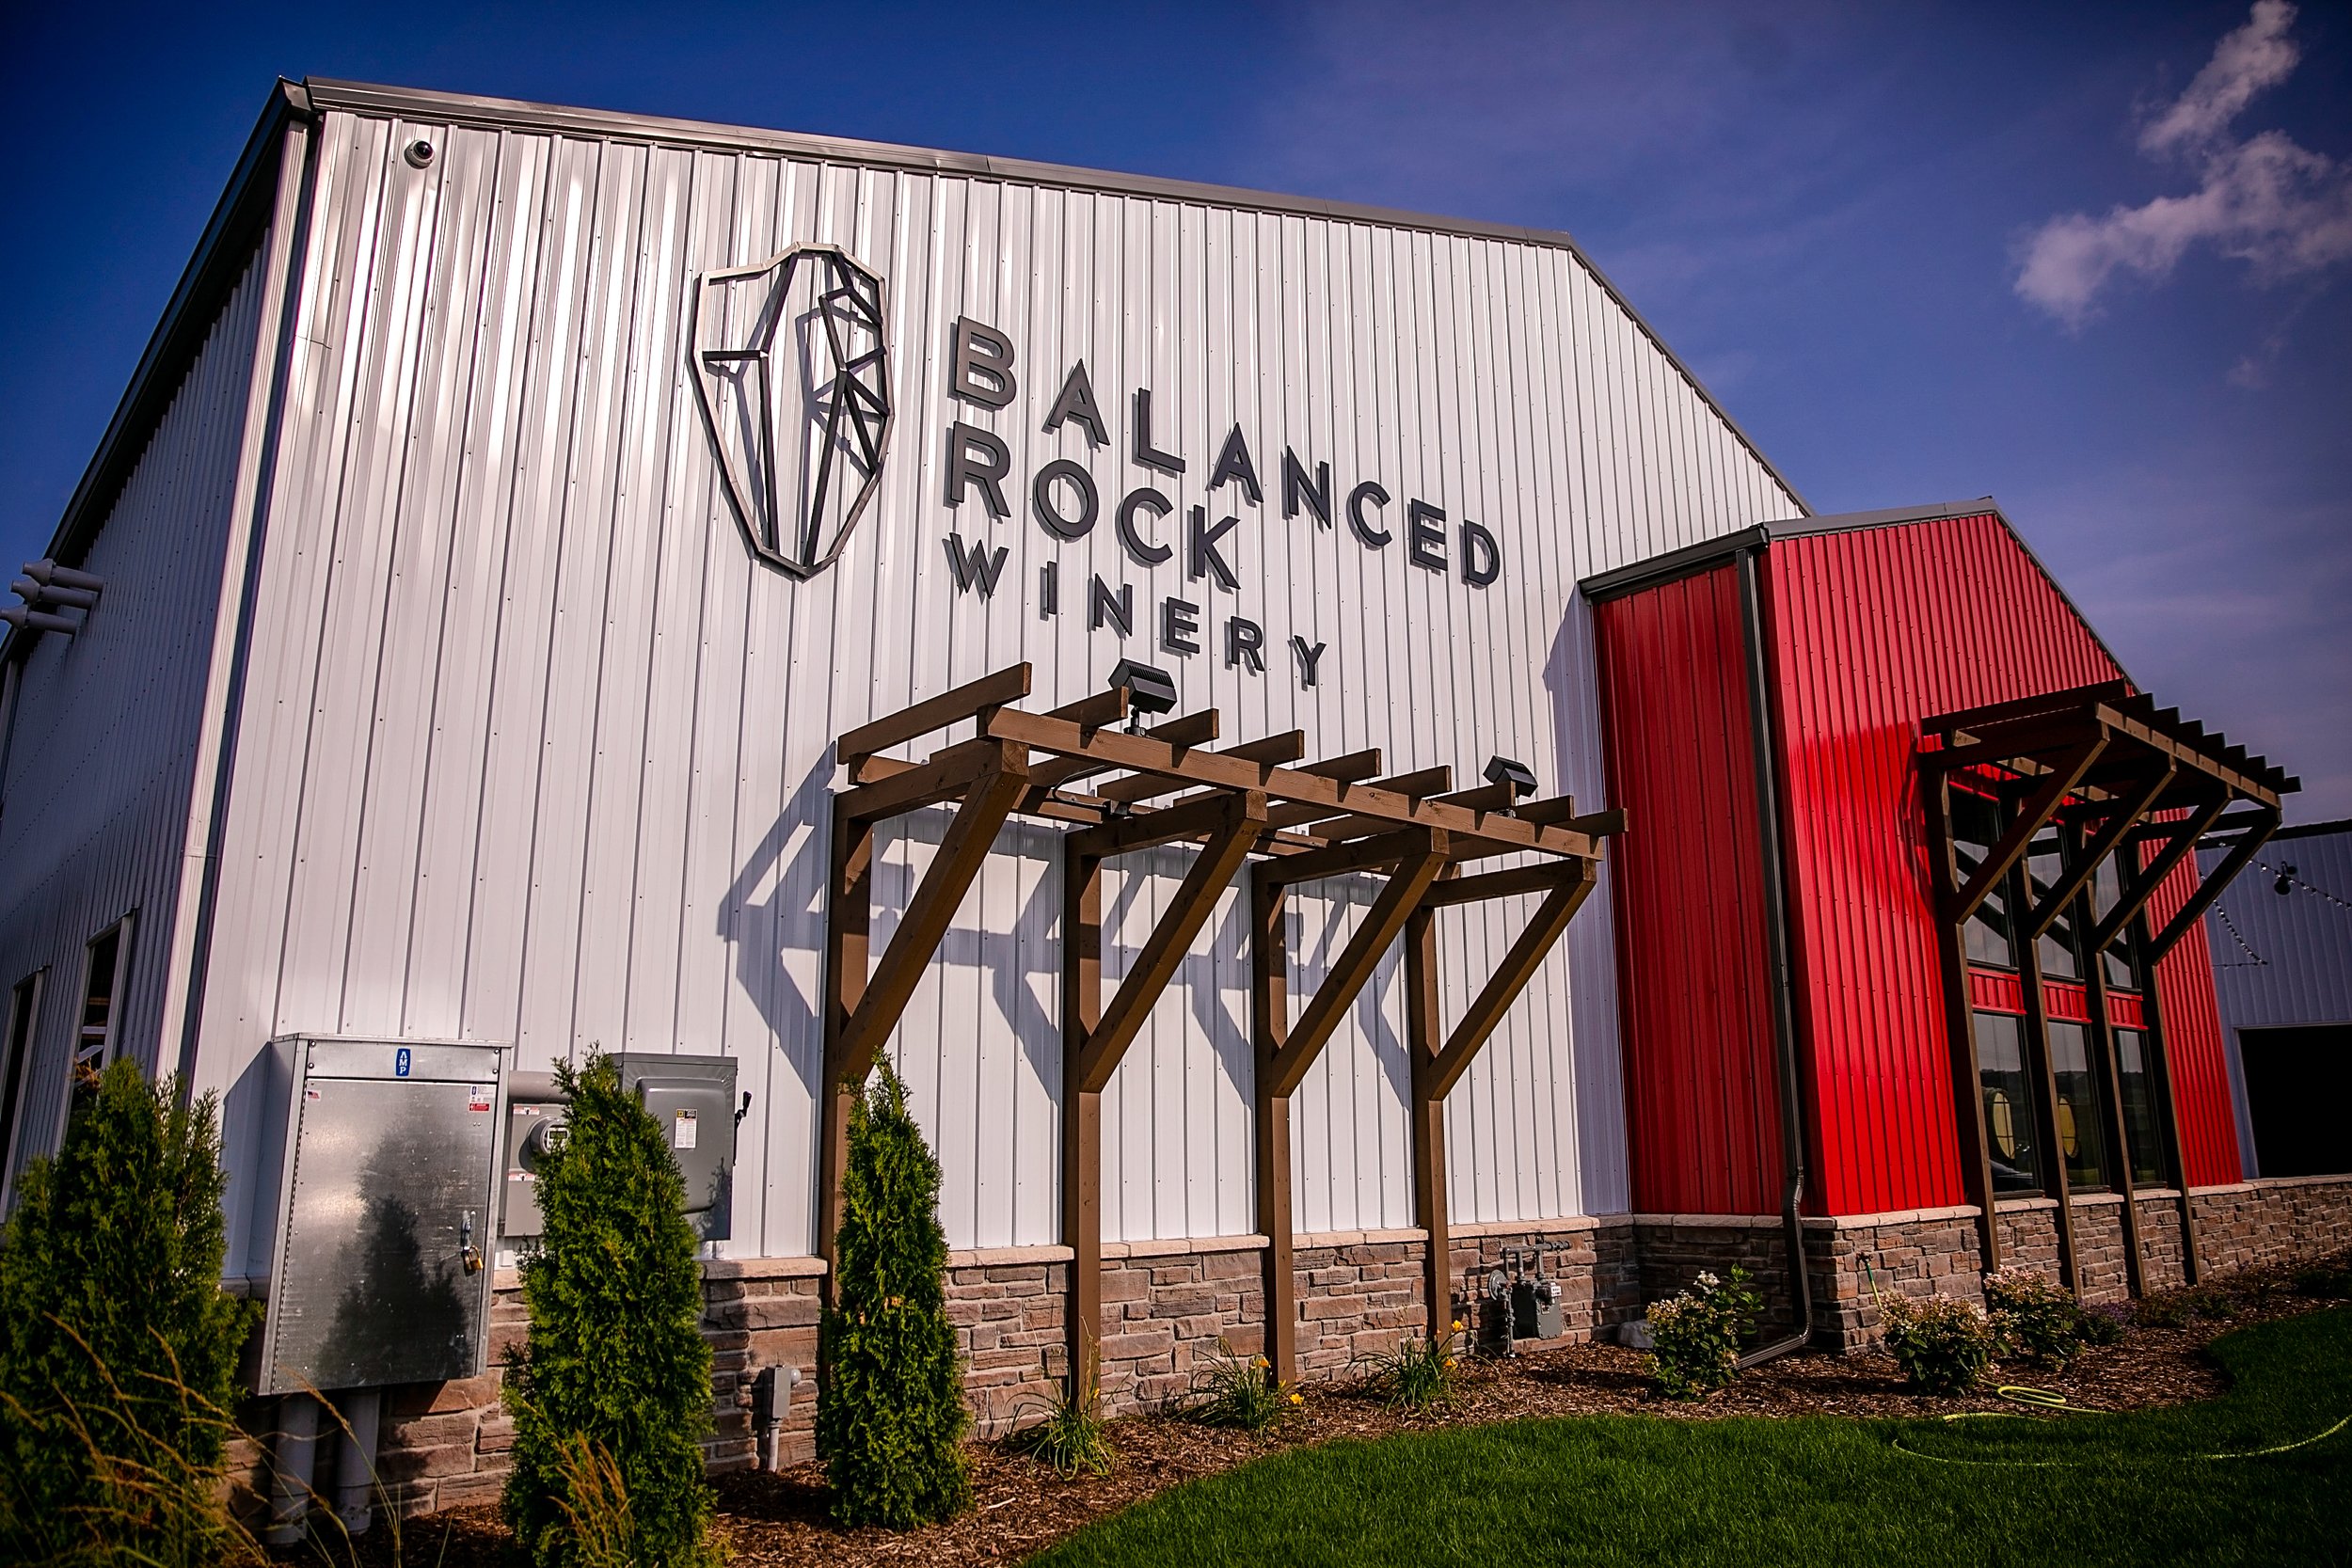 Balanced Rock Winery - Baraboo, WI